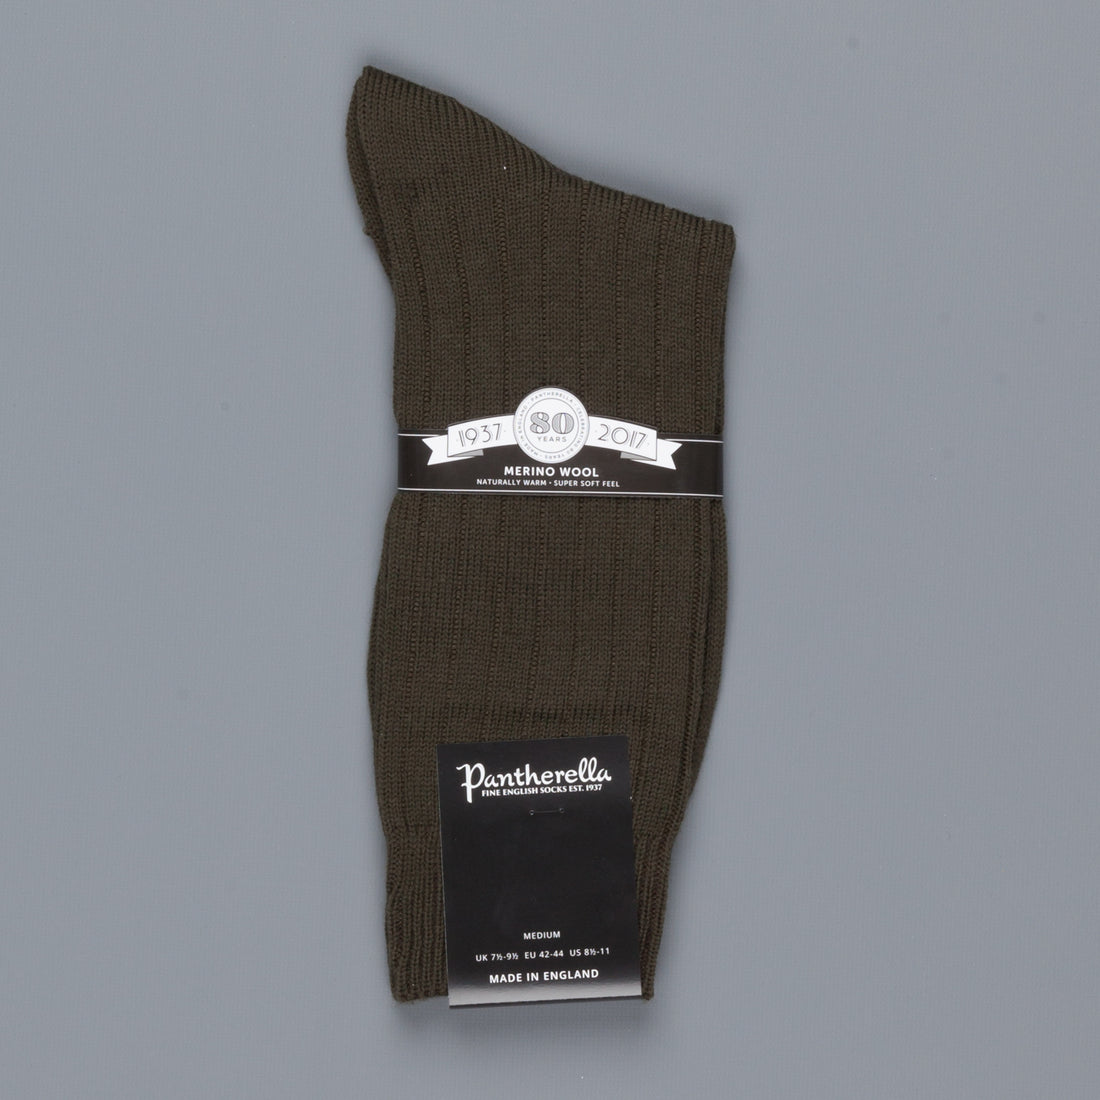 Pantherella Packington Merino wool socks Dark Olive